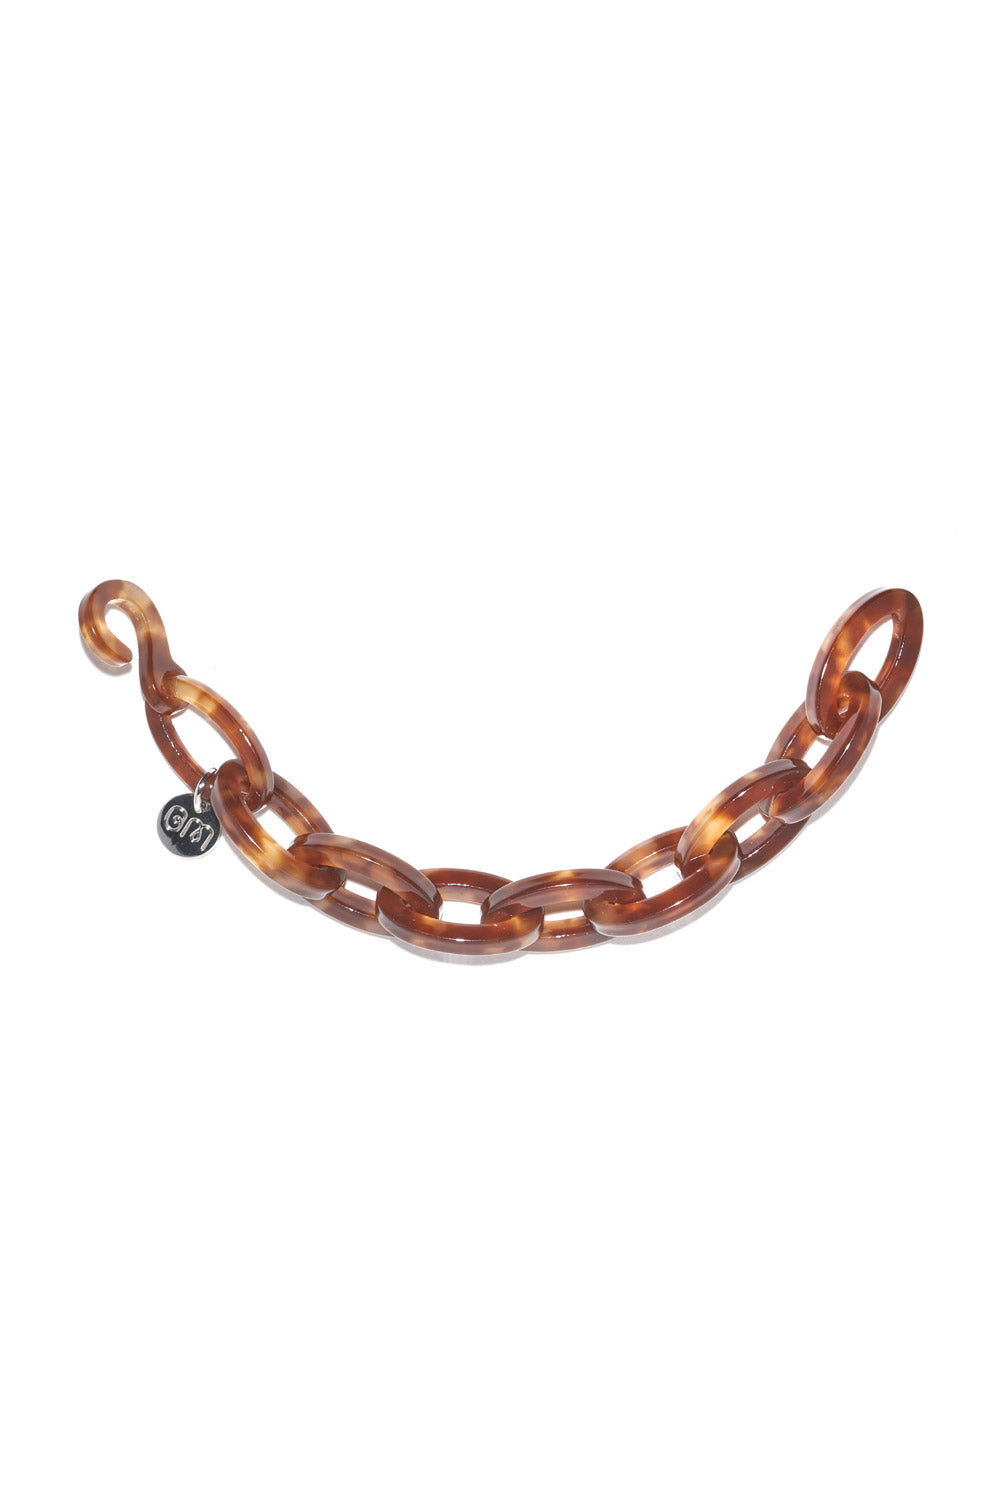 Bianca Mavrick Jewellery Chain Link Bracelet Arc Shaped Torti